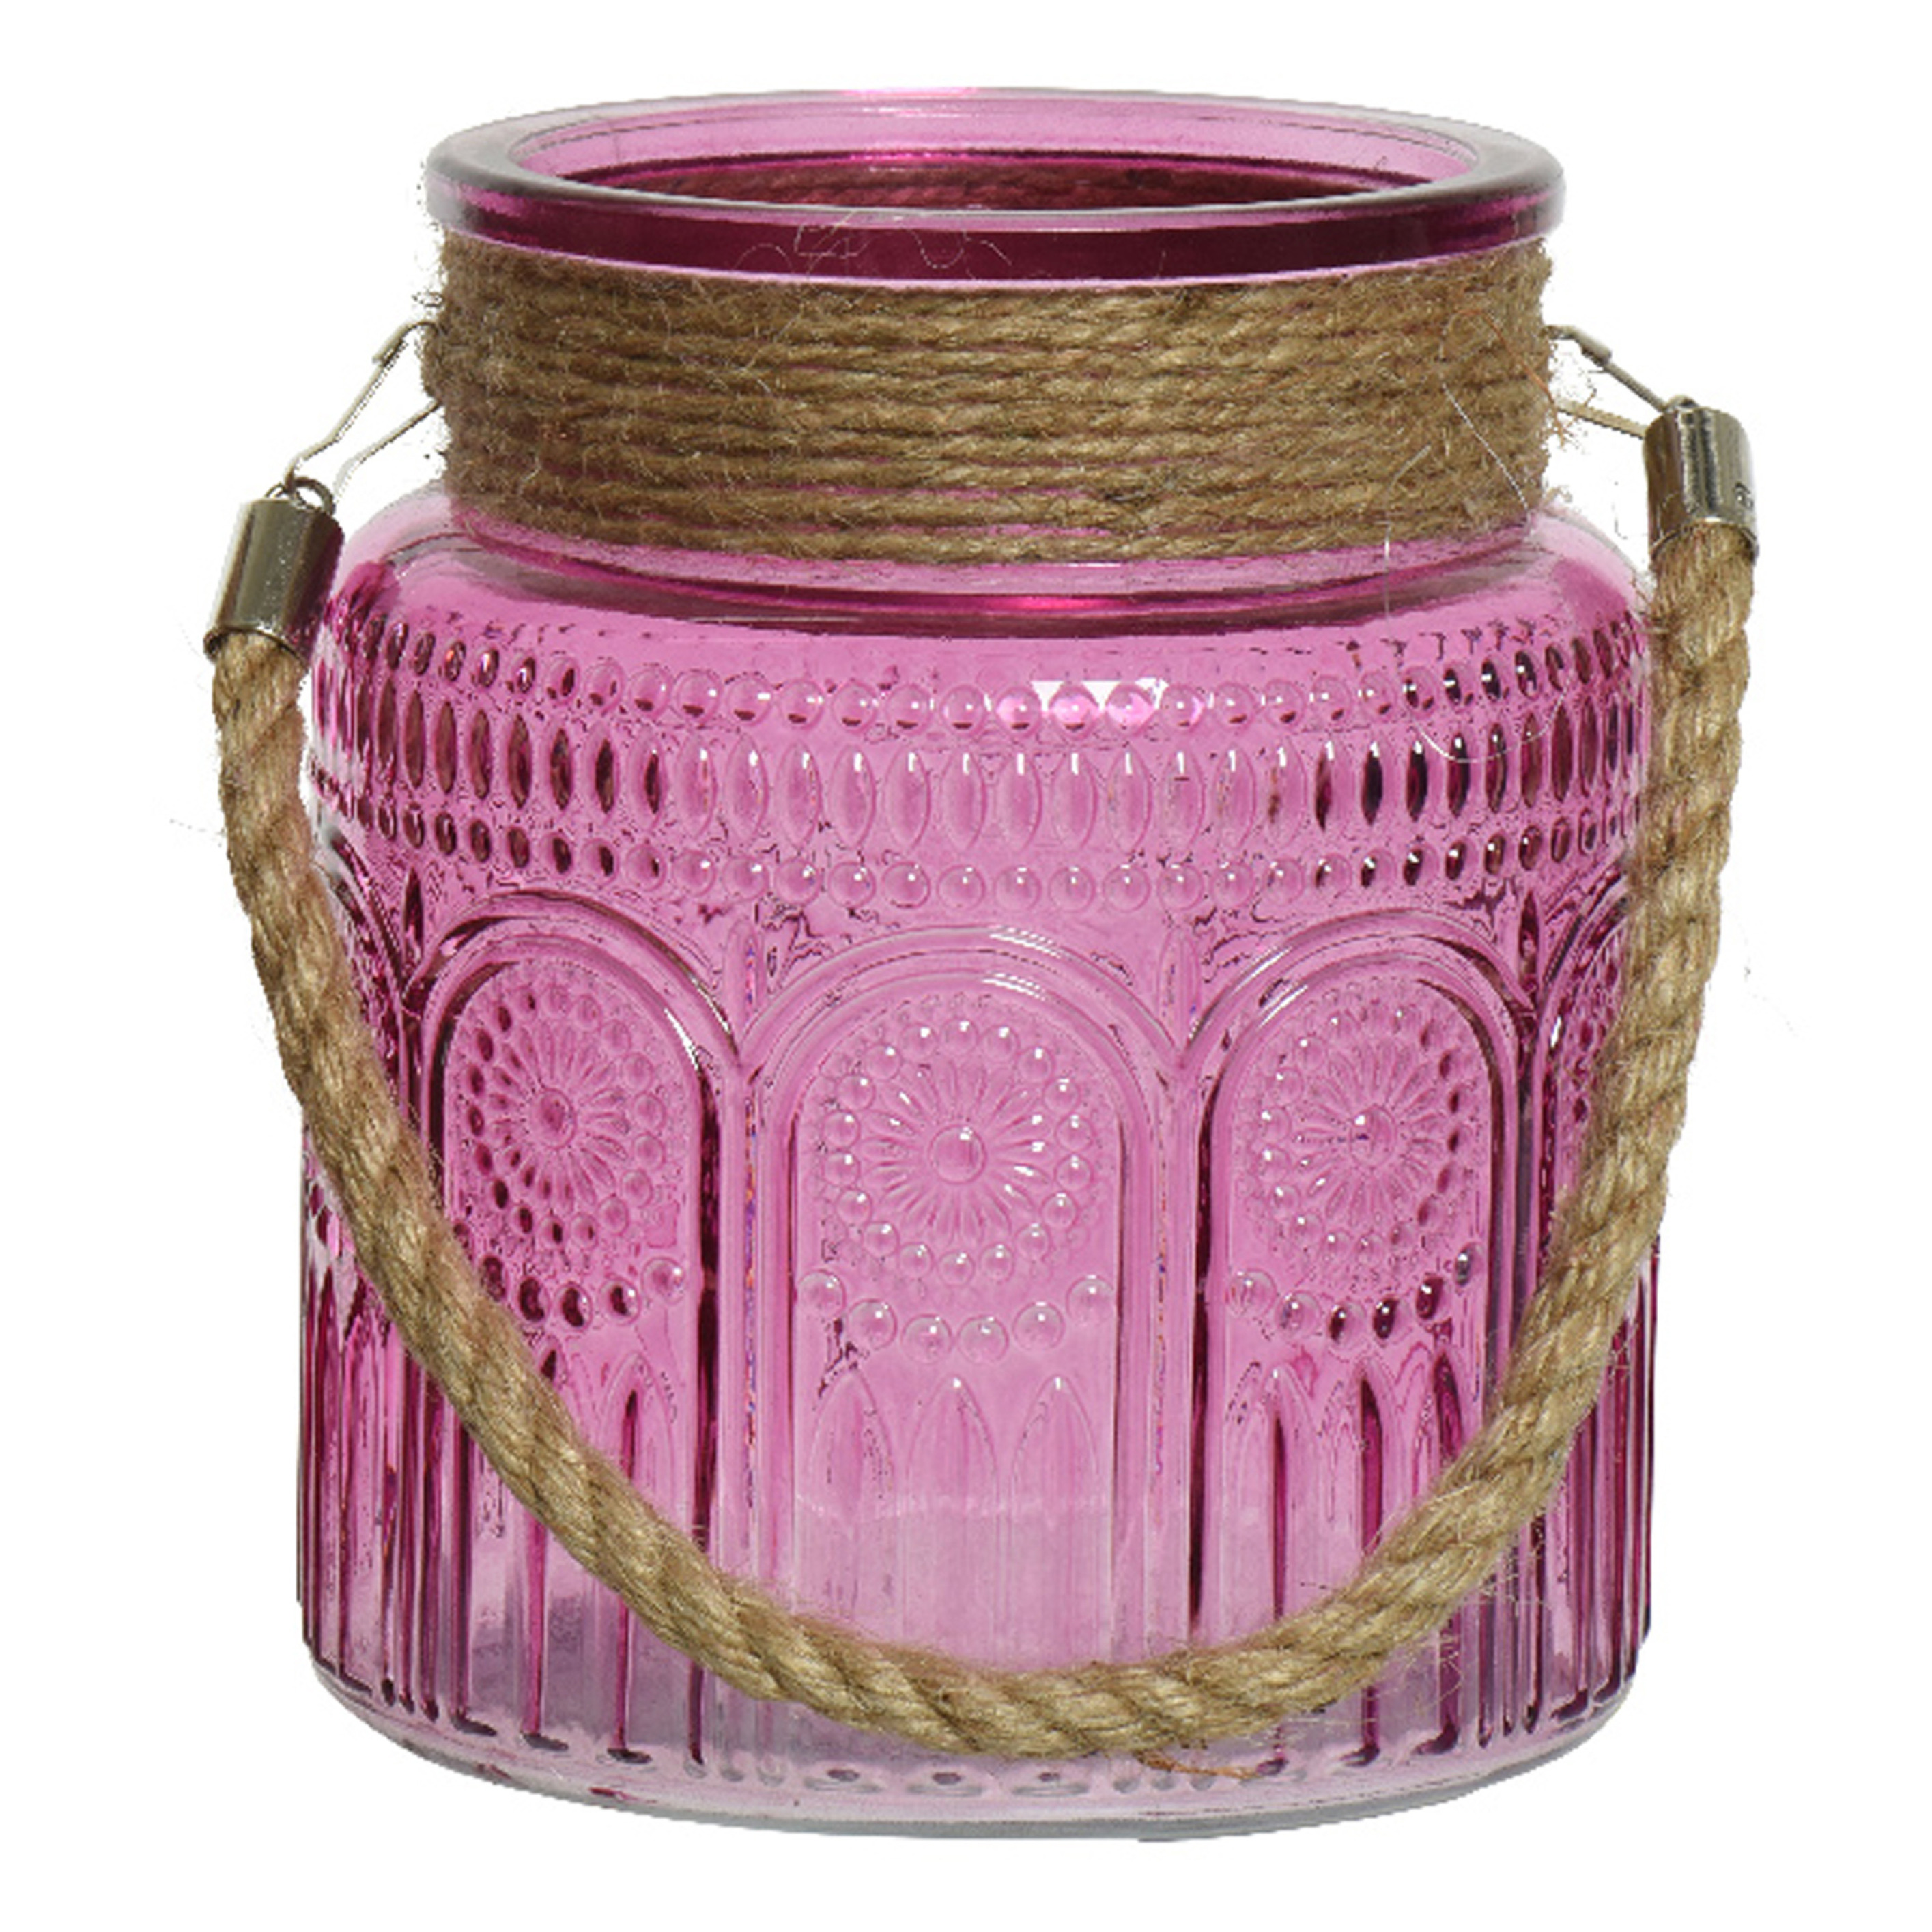 Windlicht-lantaarn met relief glas D14 x H16 cm fuchsia roze